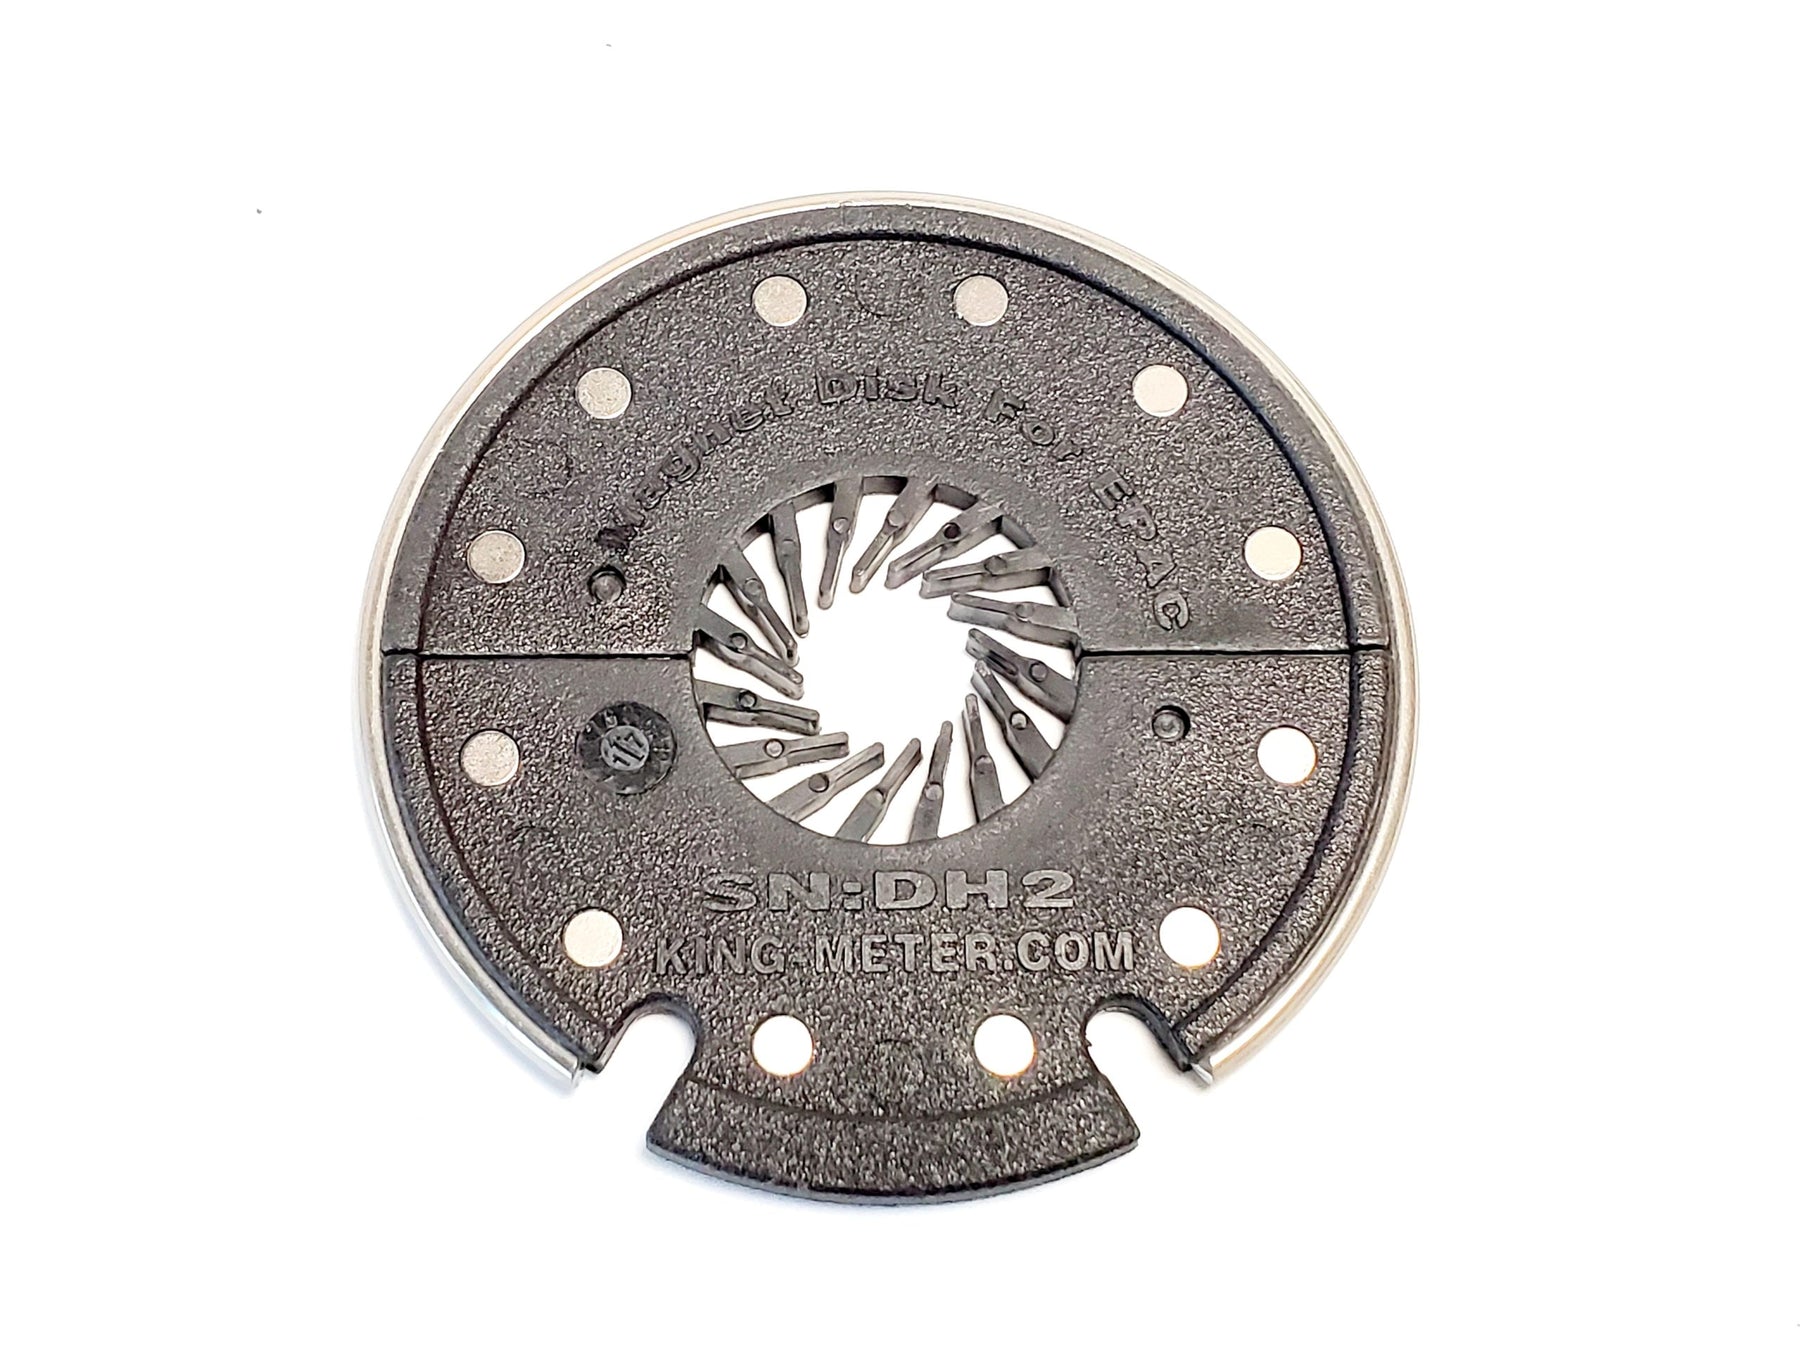 Pedal Assist Sensor Magnetic Disc for Electric Bike